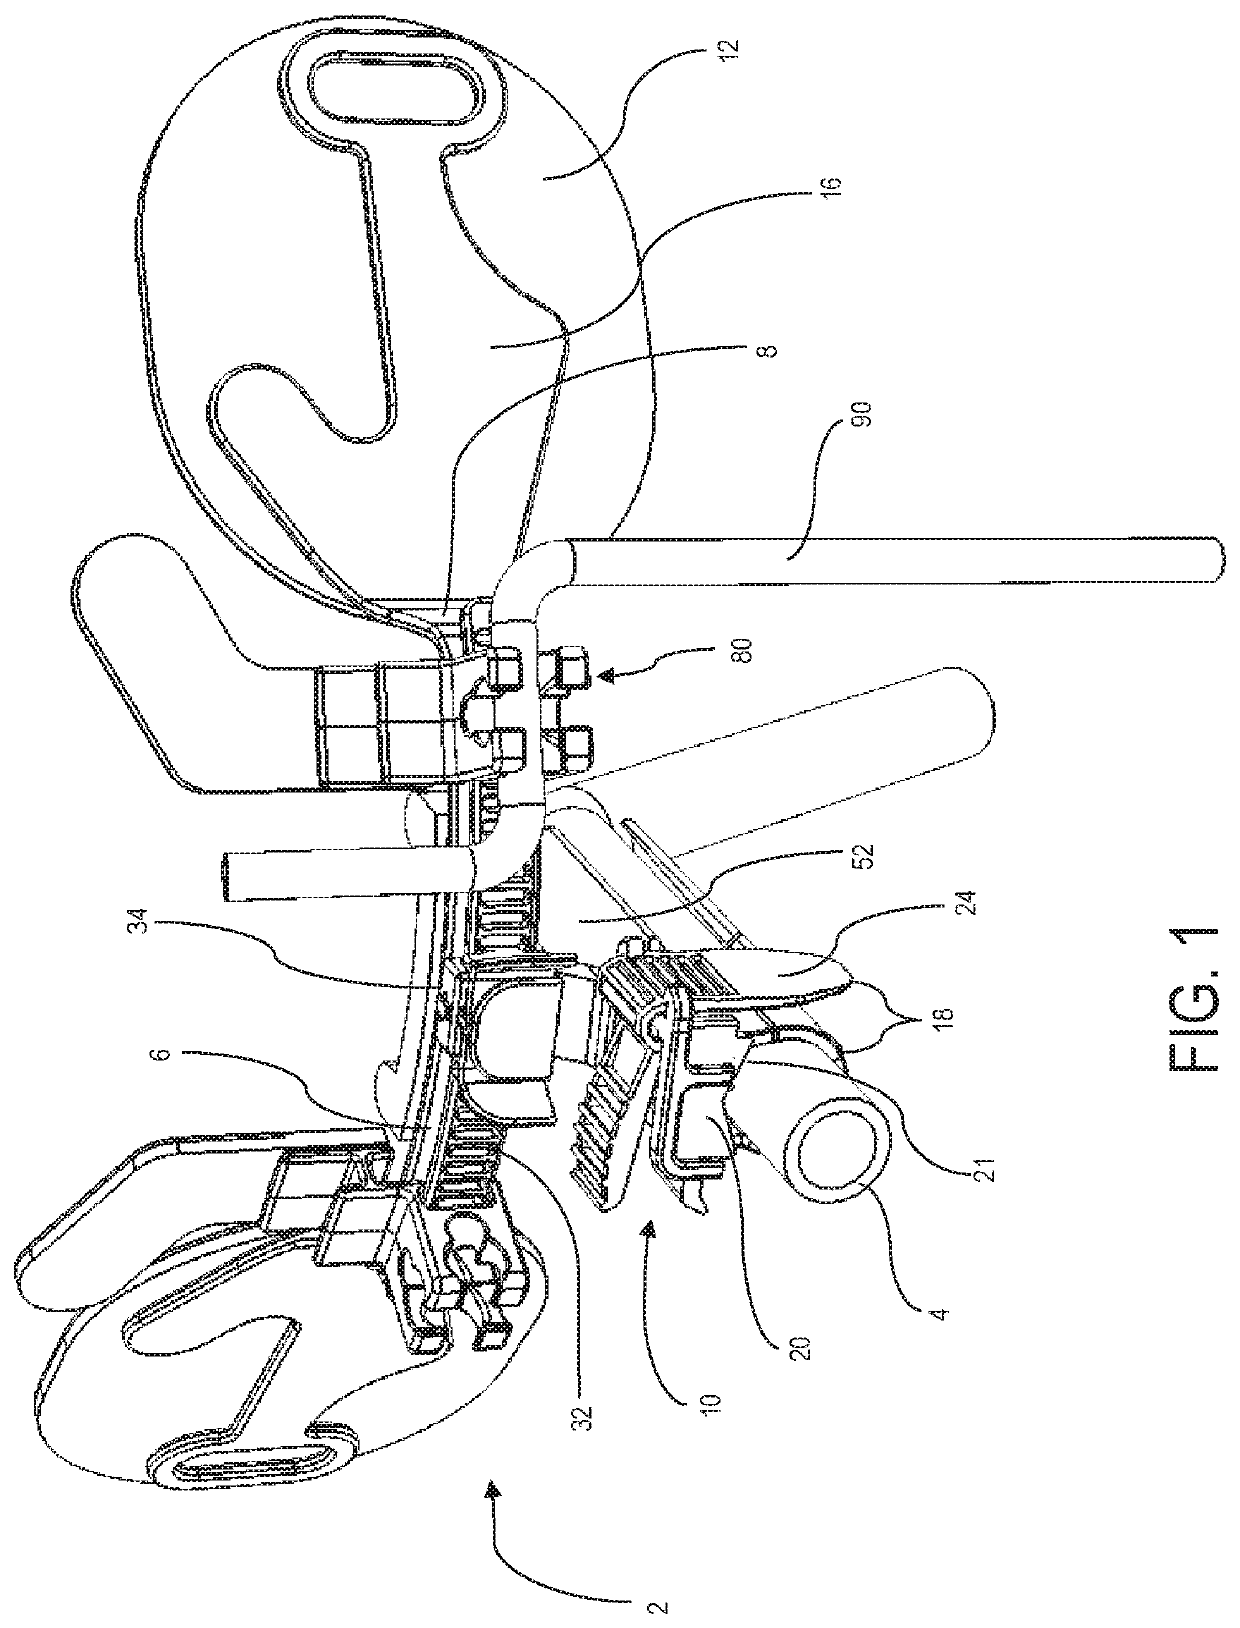 Endotracheal tube holder device